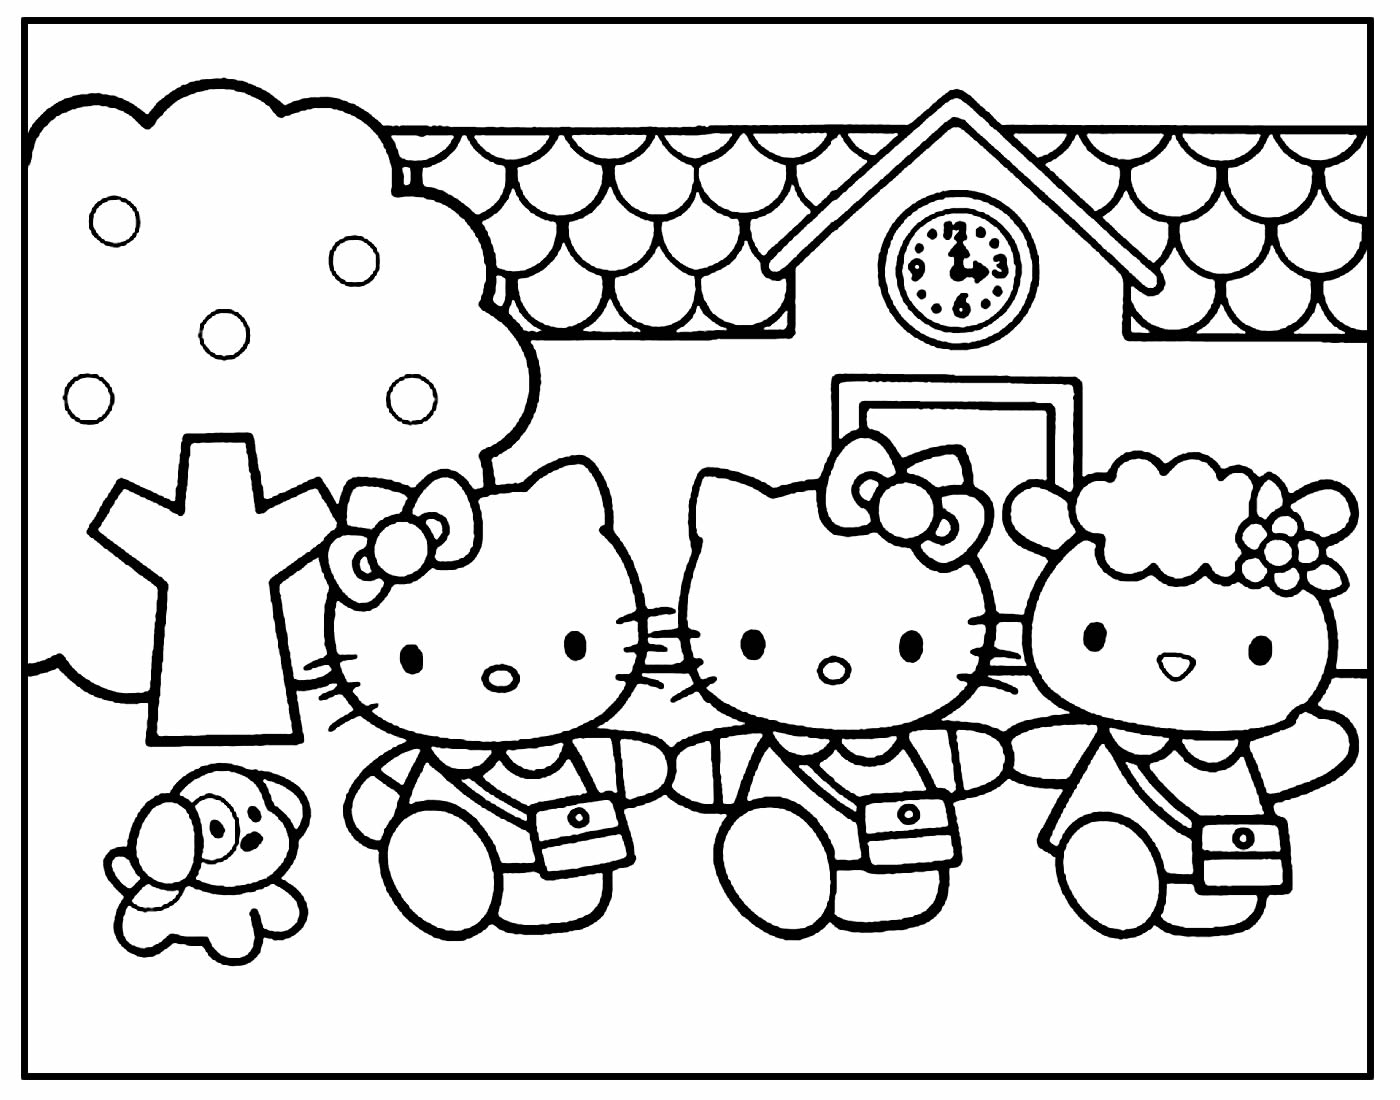 Página para colorir da Hello Kitty